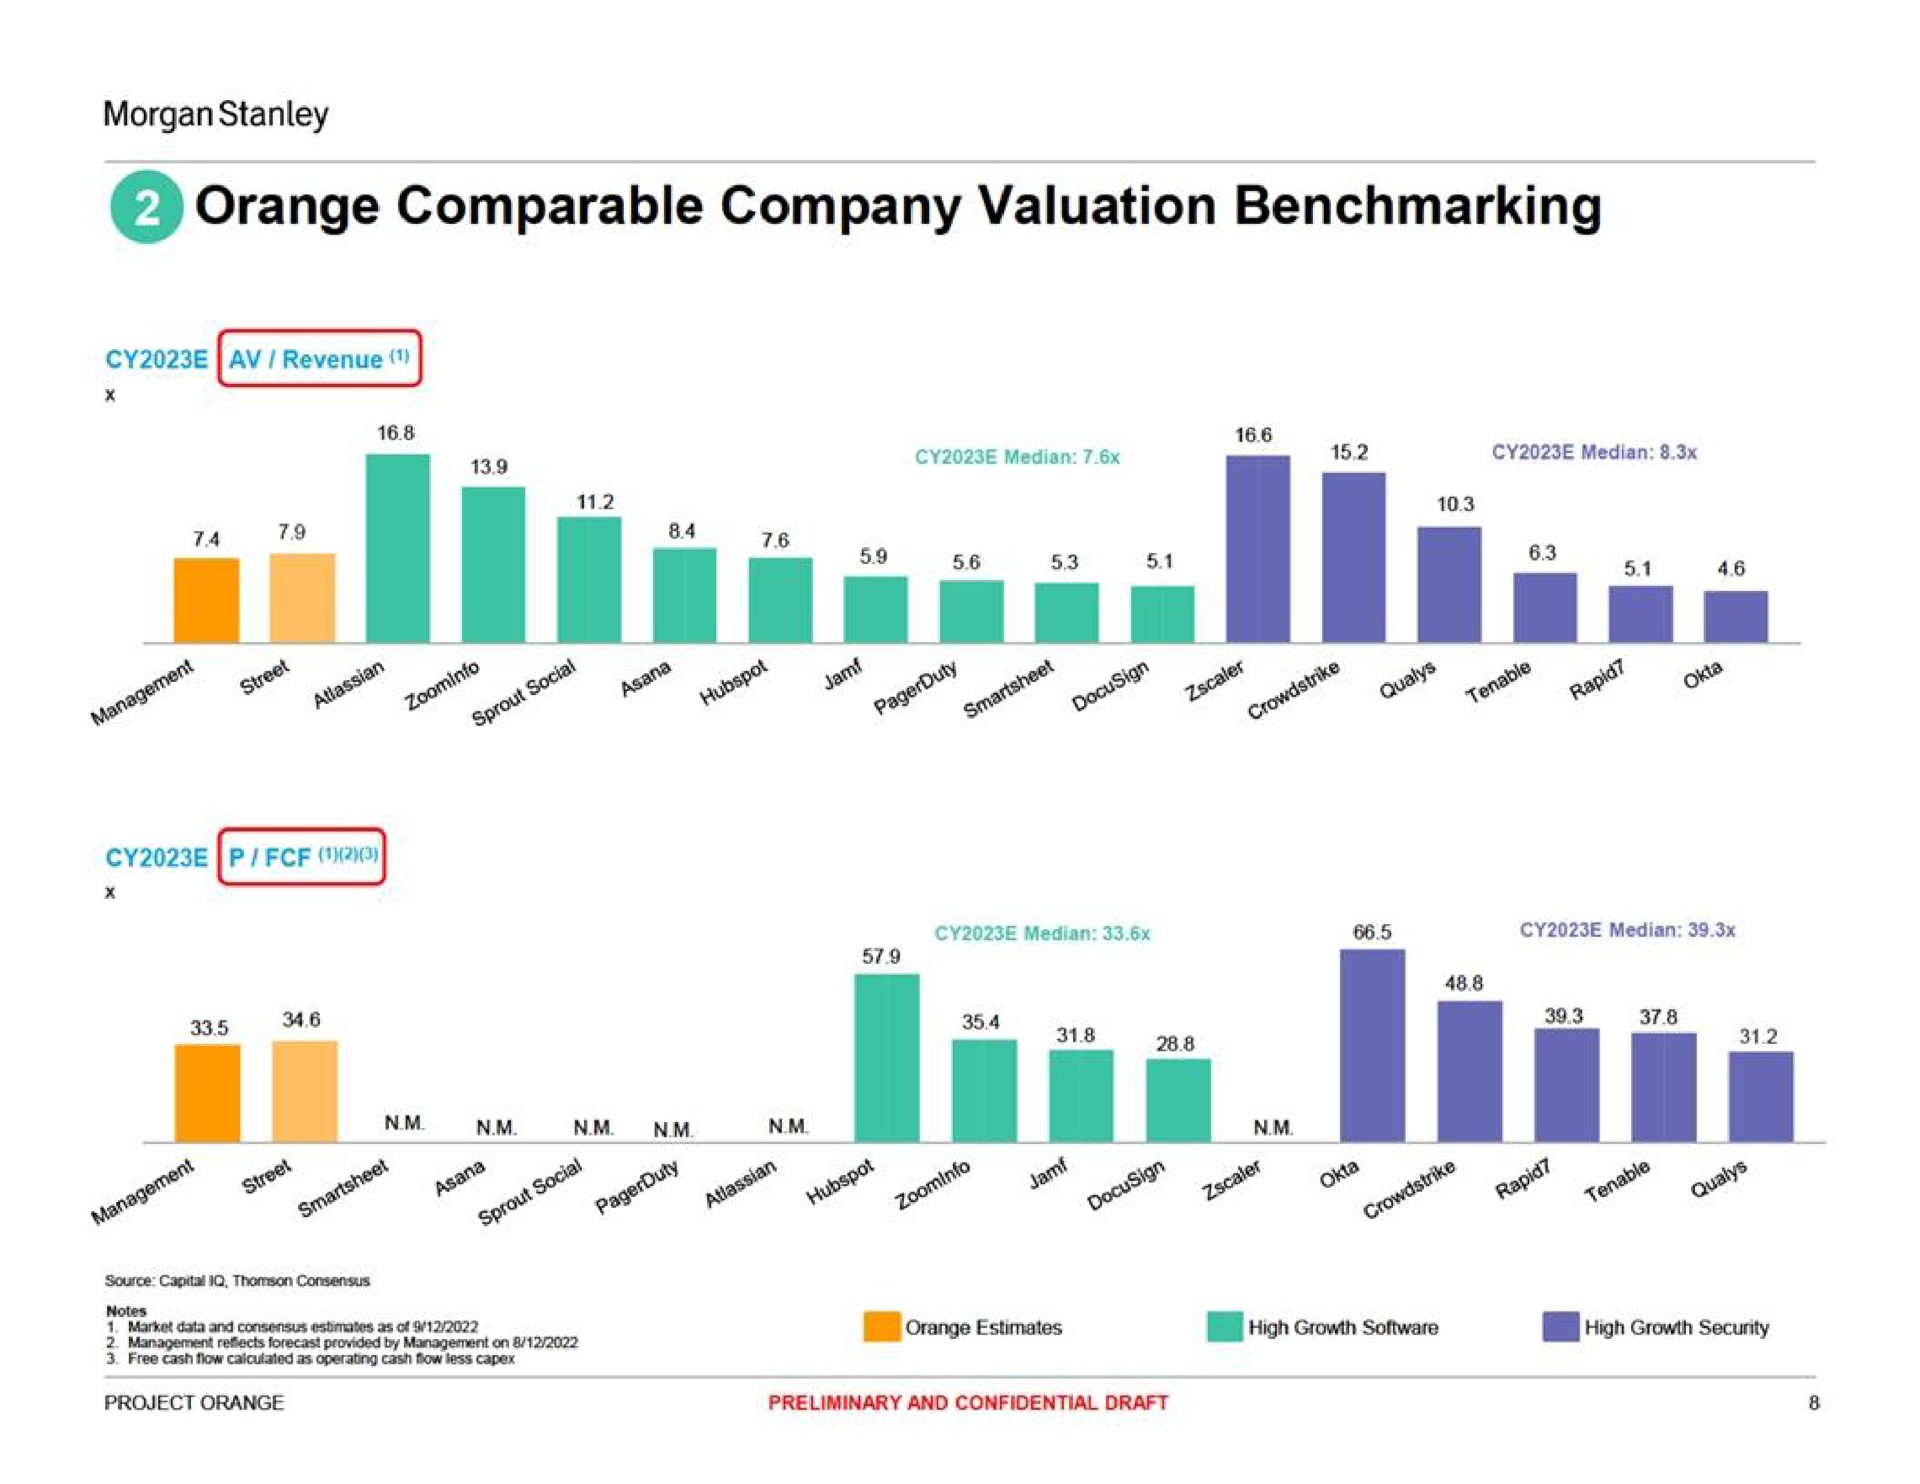 orange comparable company valuation am i at | Morgan Stanley